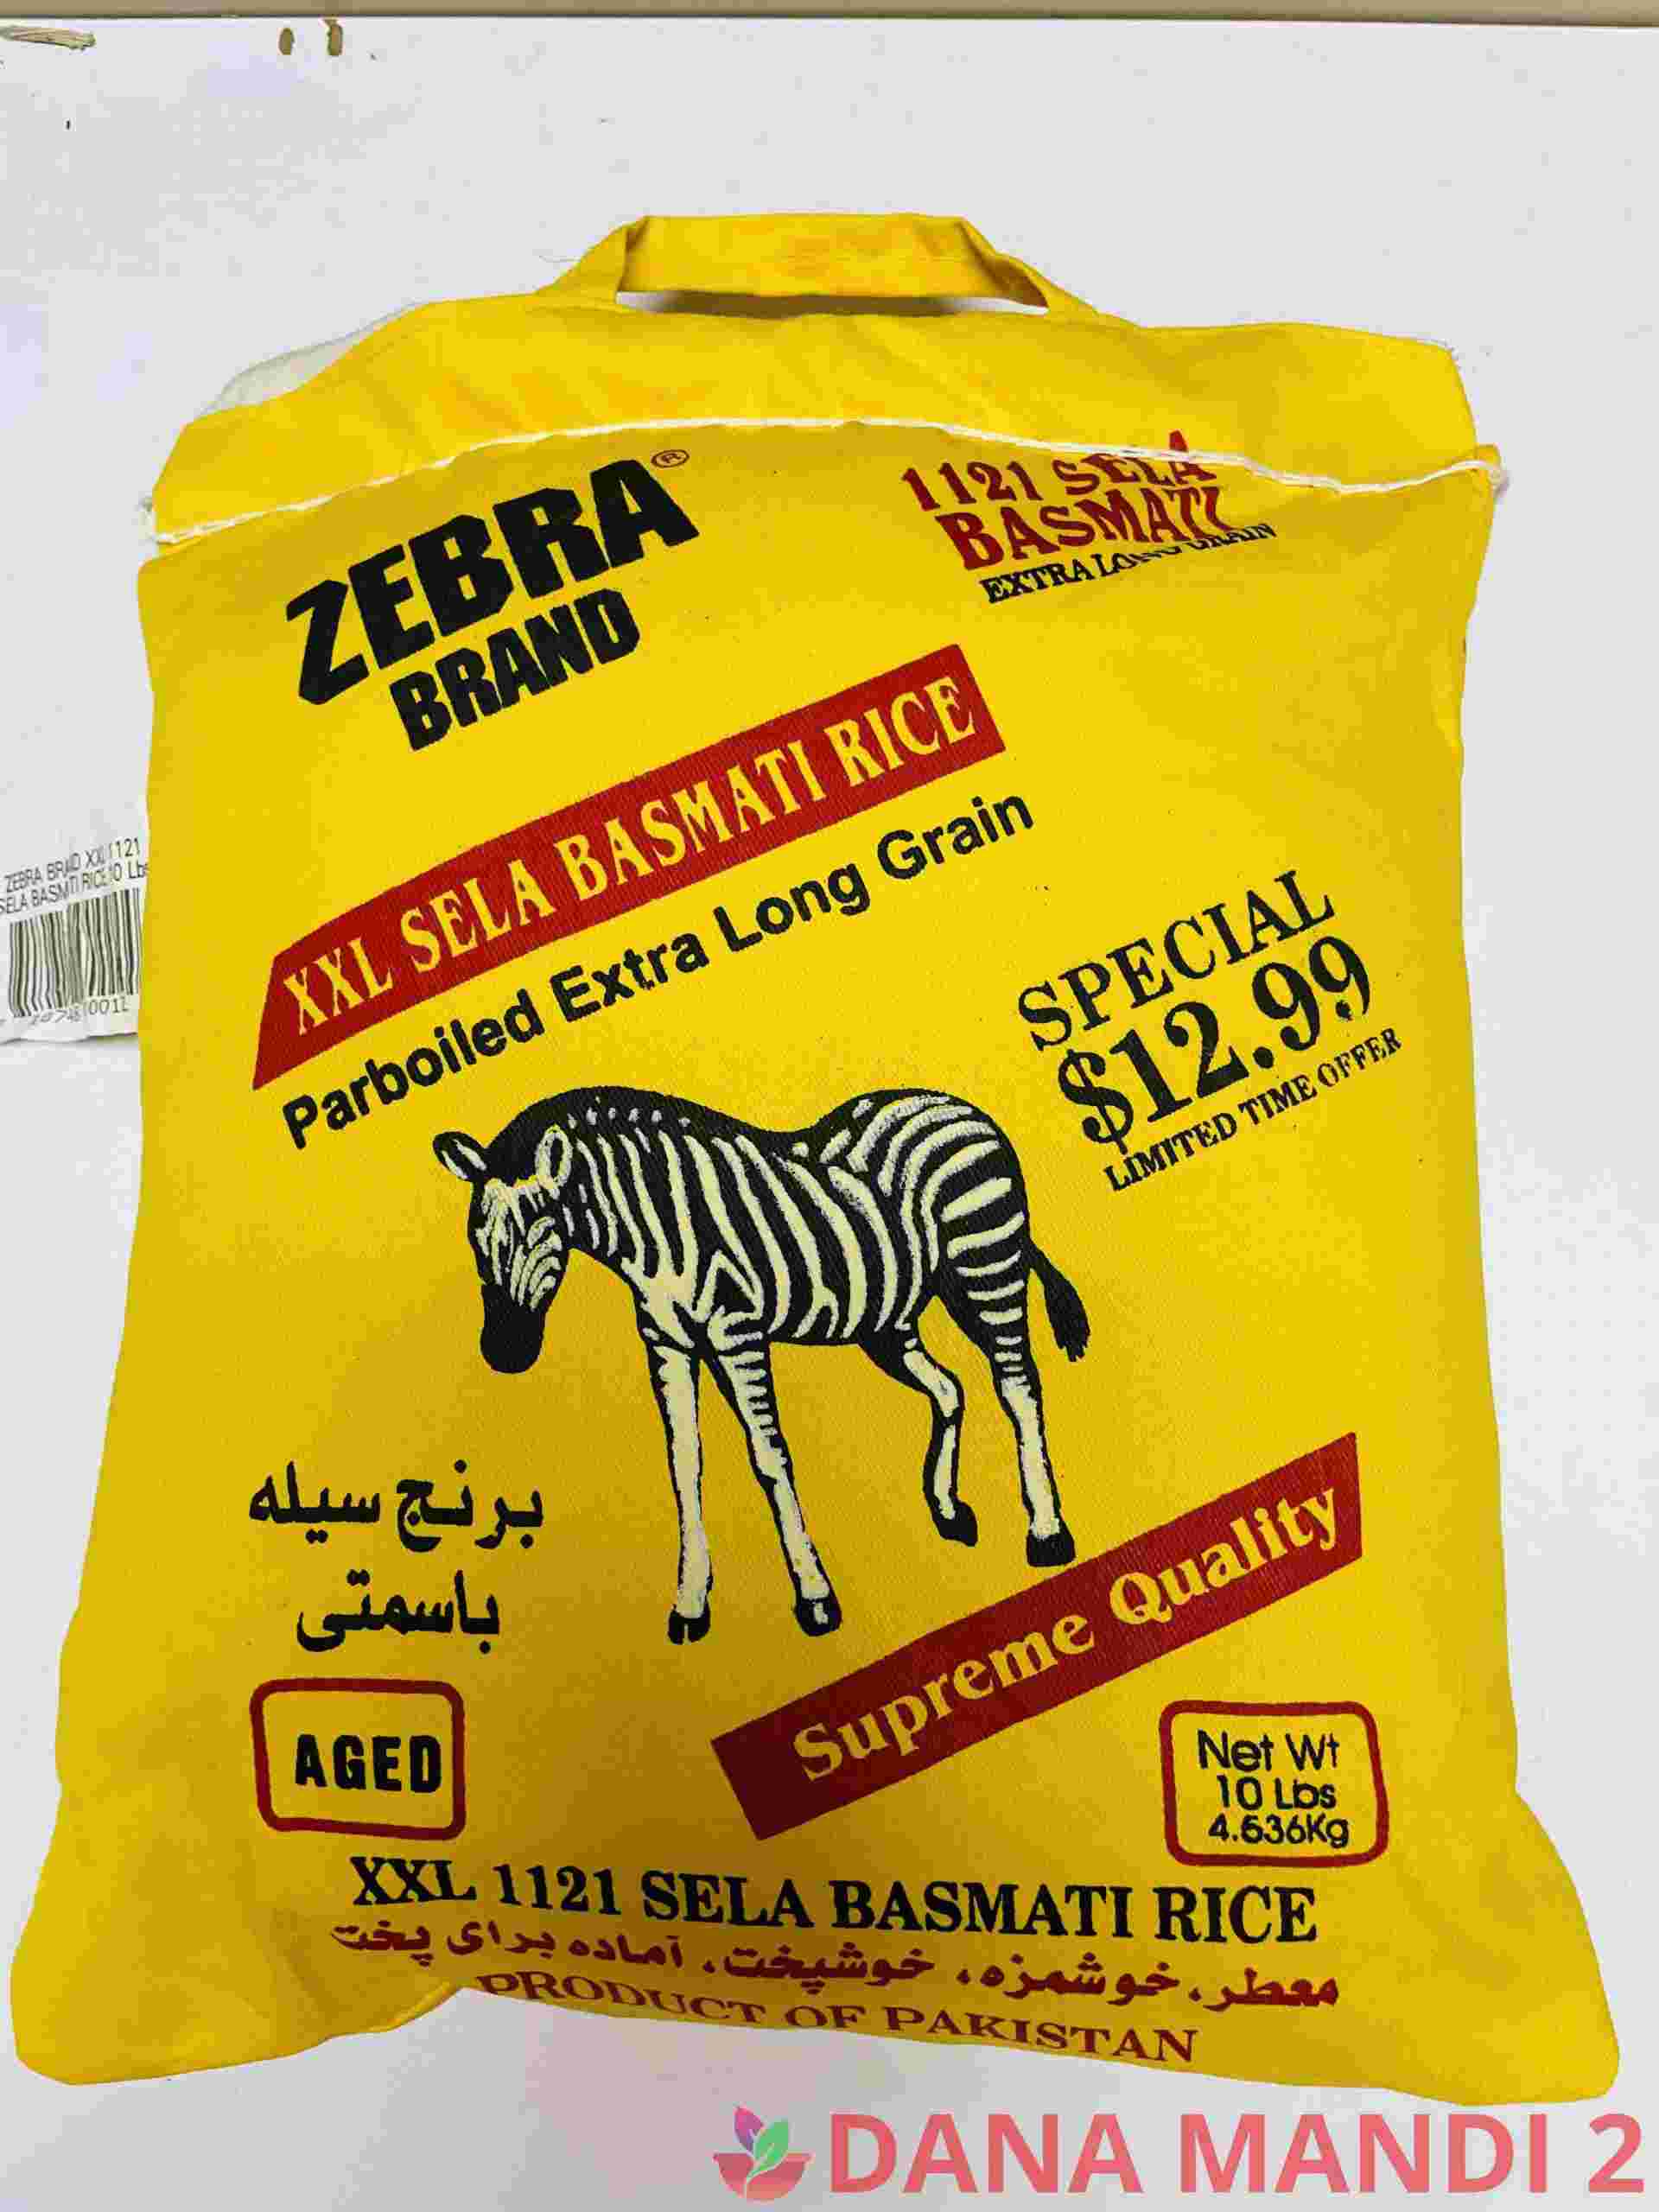 Zebra 1121 Xxl Sela Basmati Rice